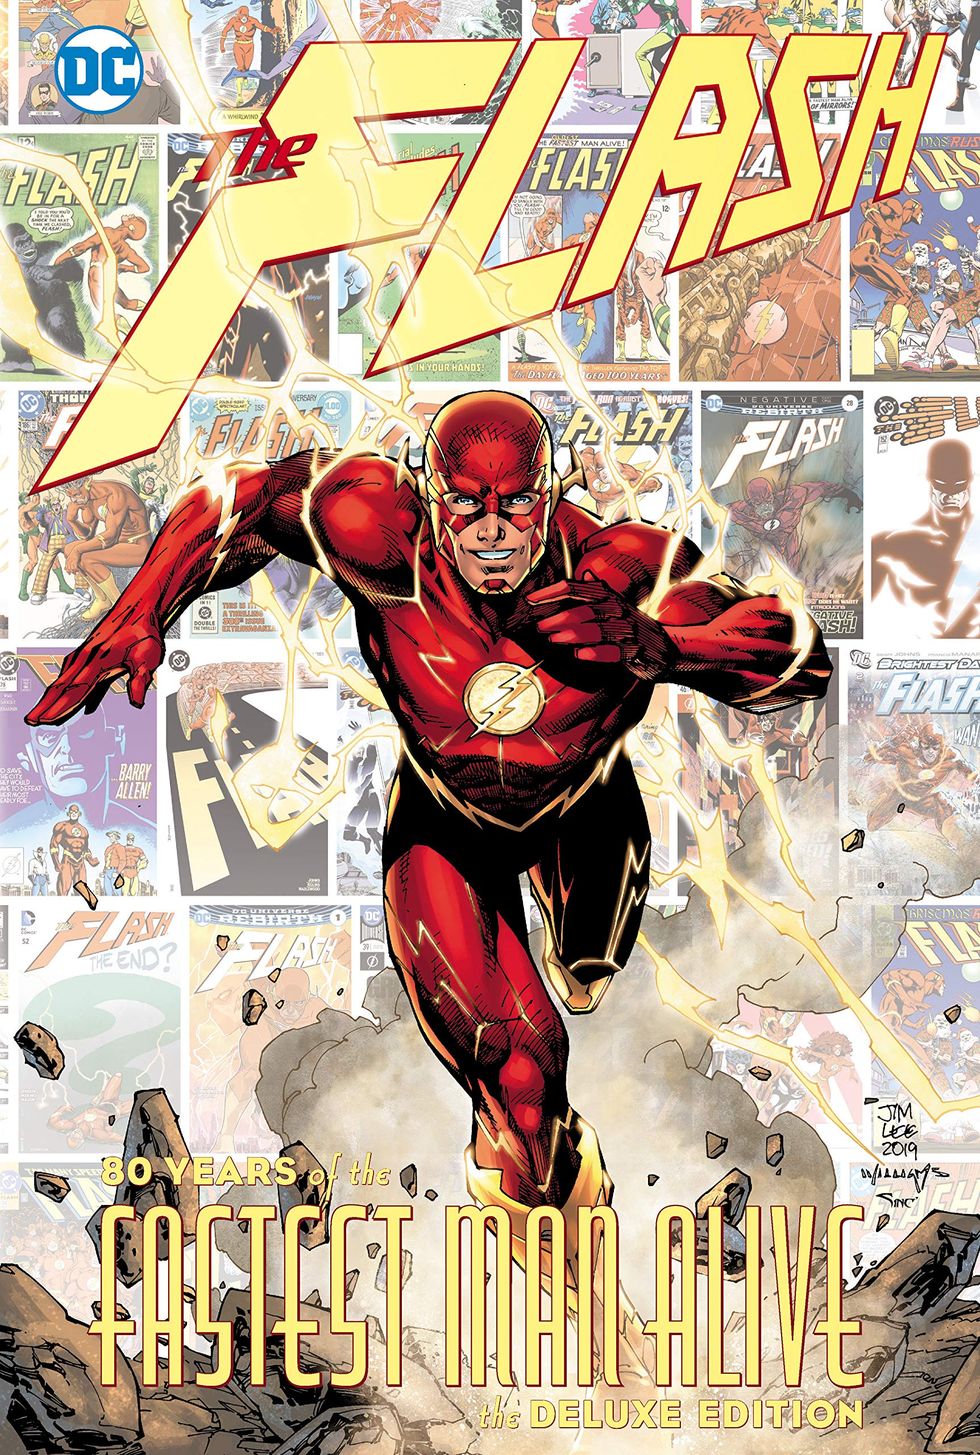 Did The Flash just introduce Black Flash?